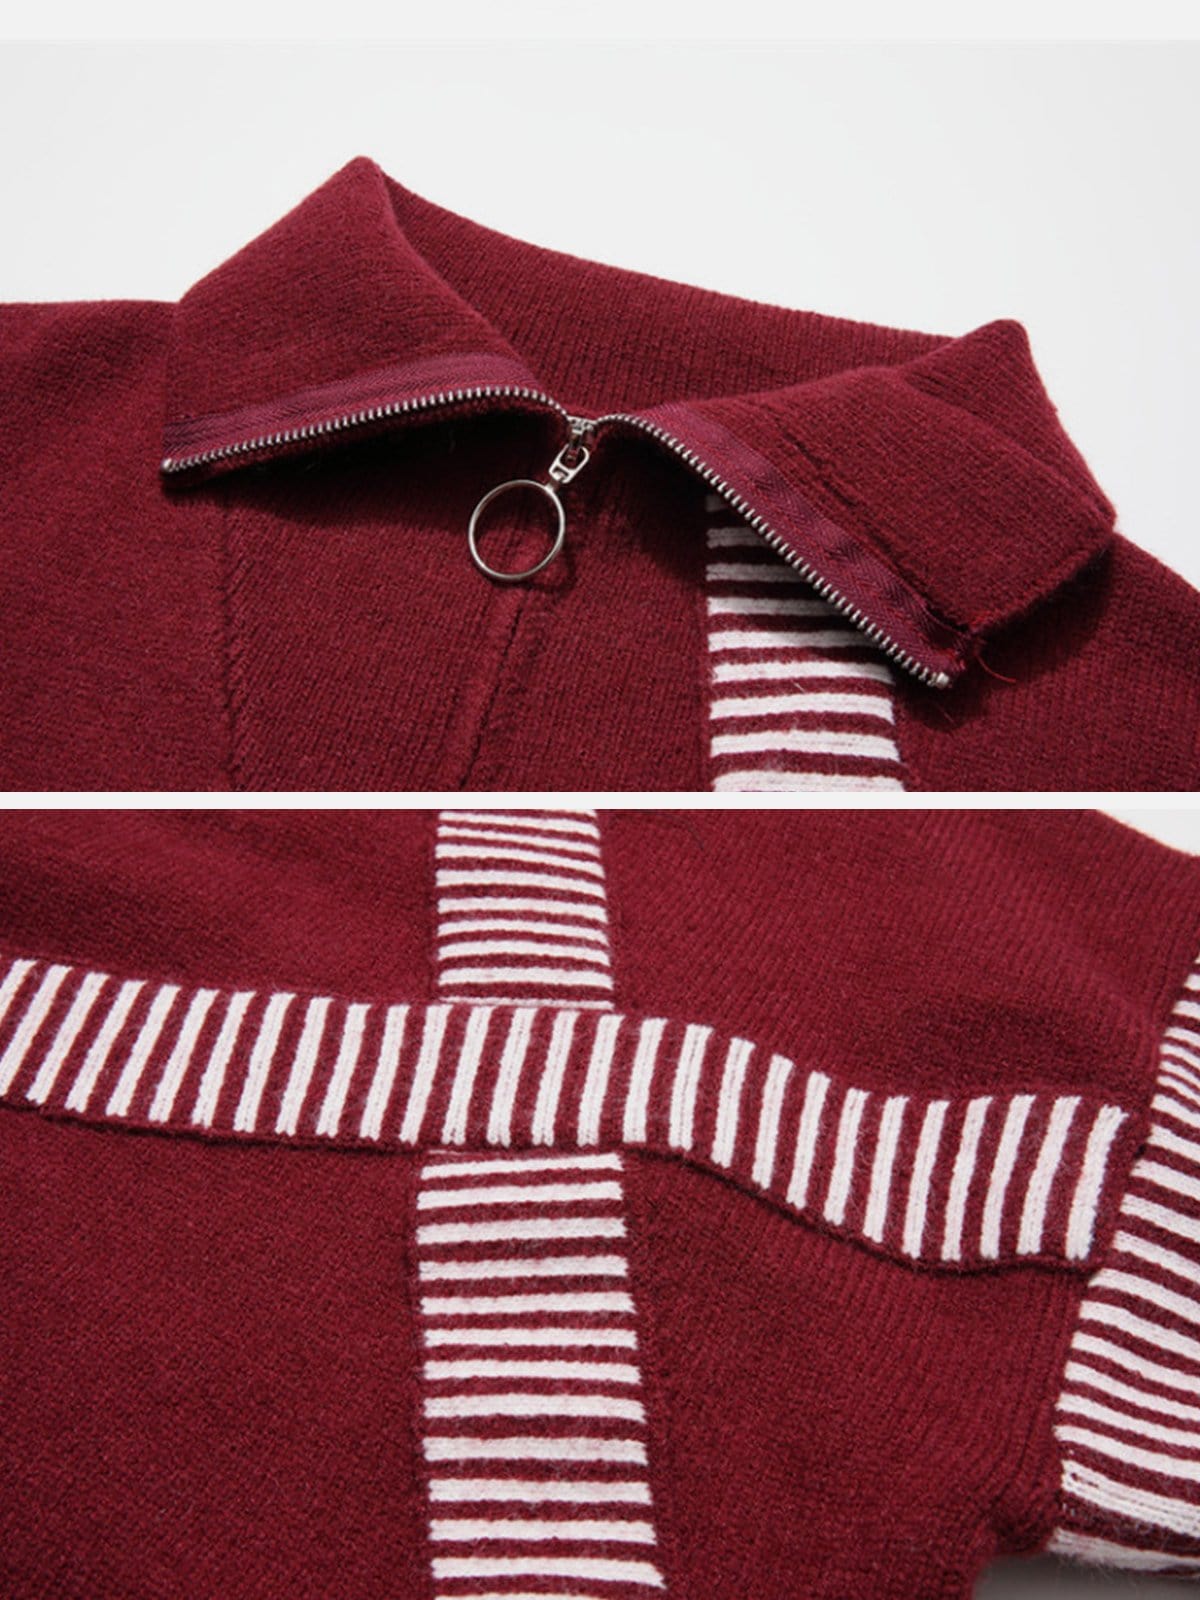 NEV Striped Material Splicing Zip Cardigan Sweater